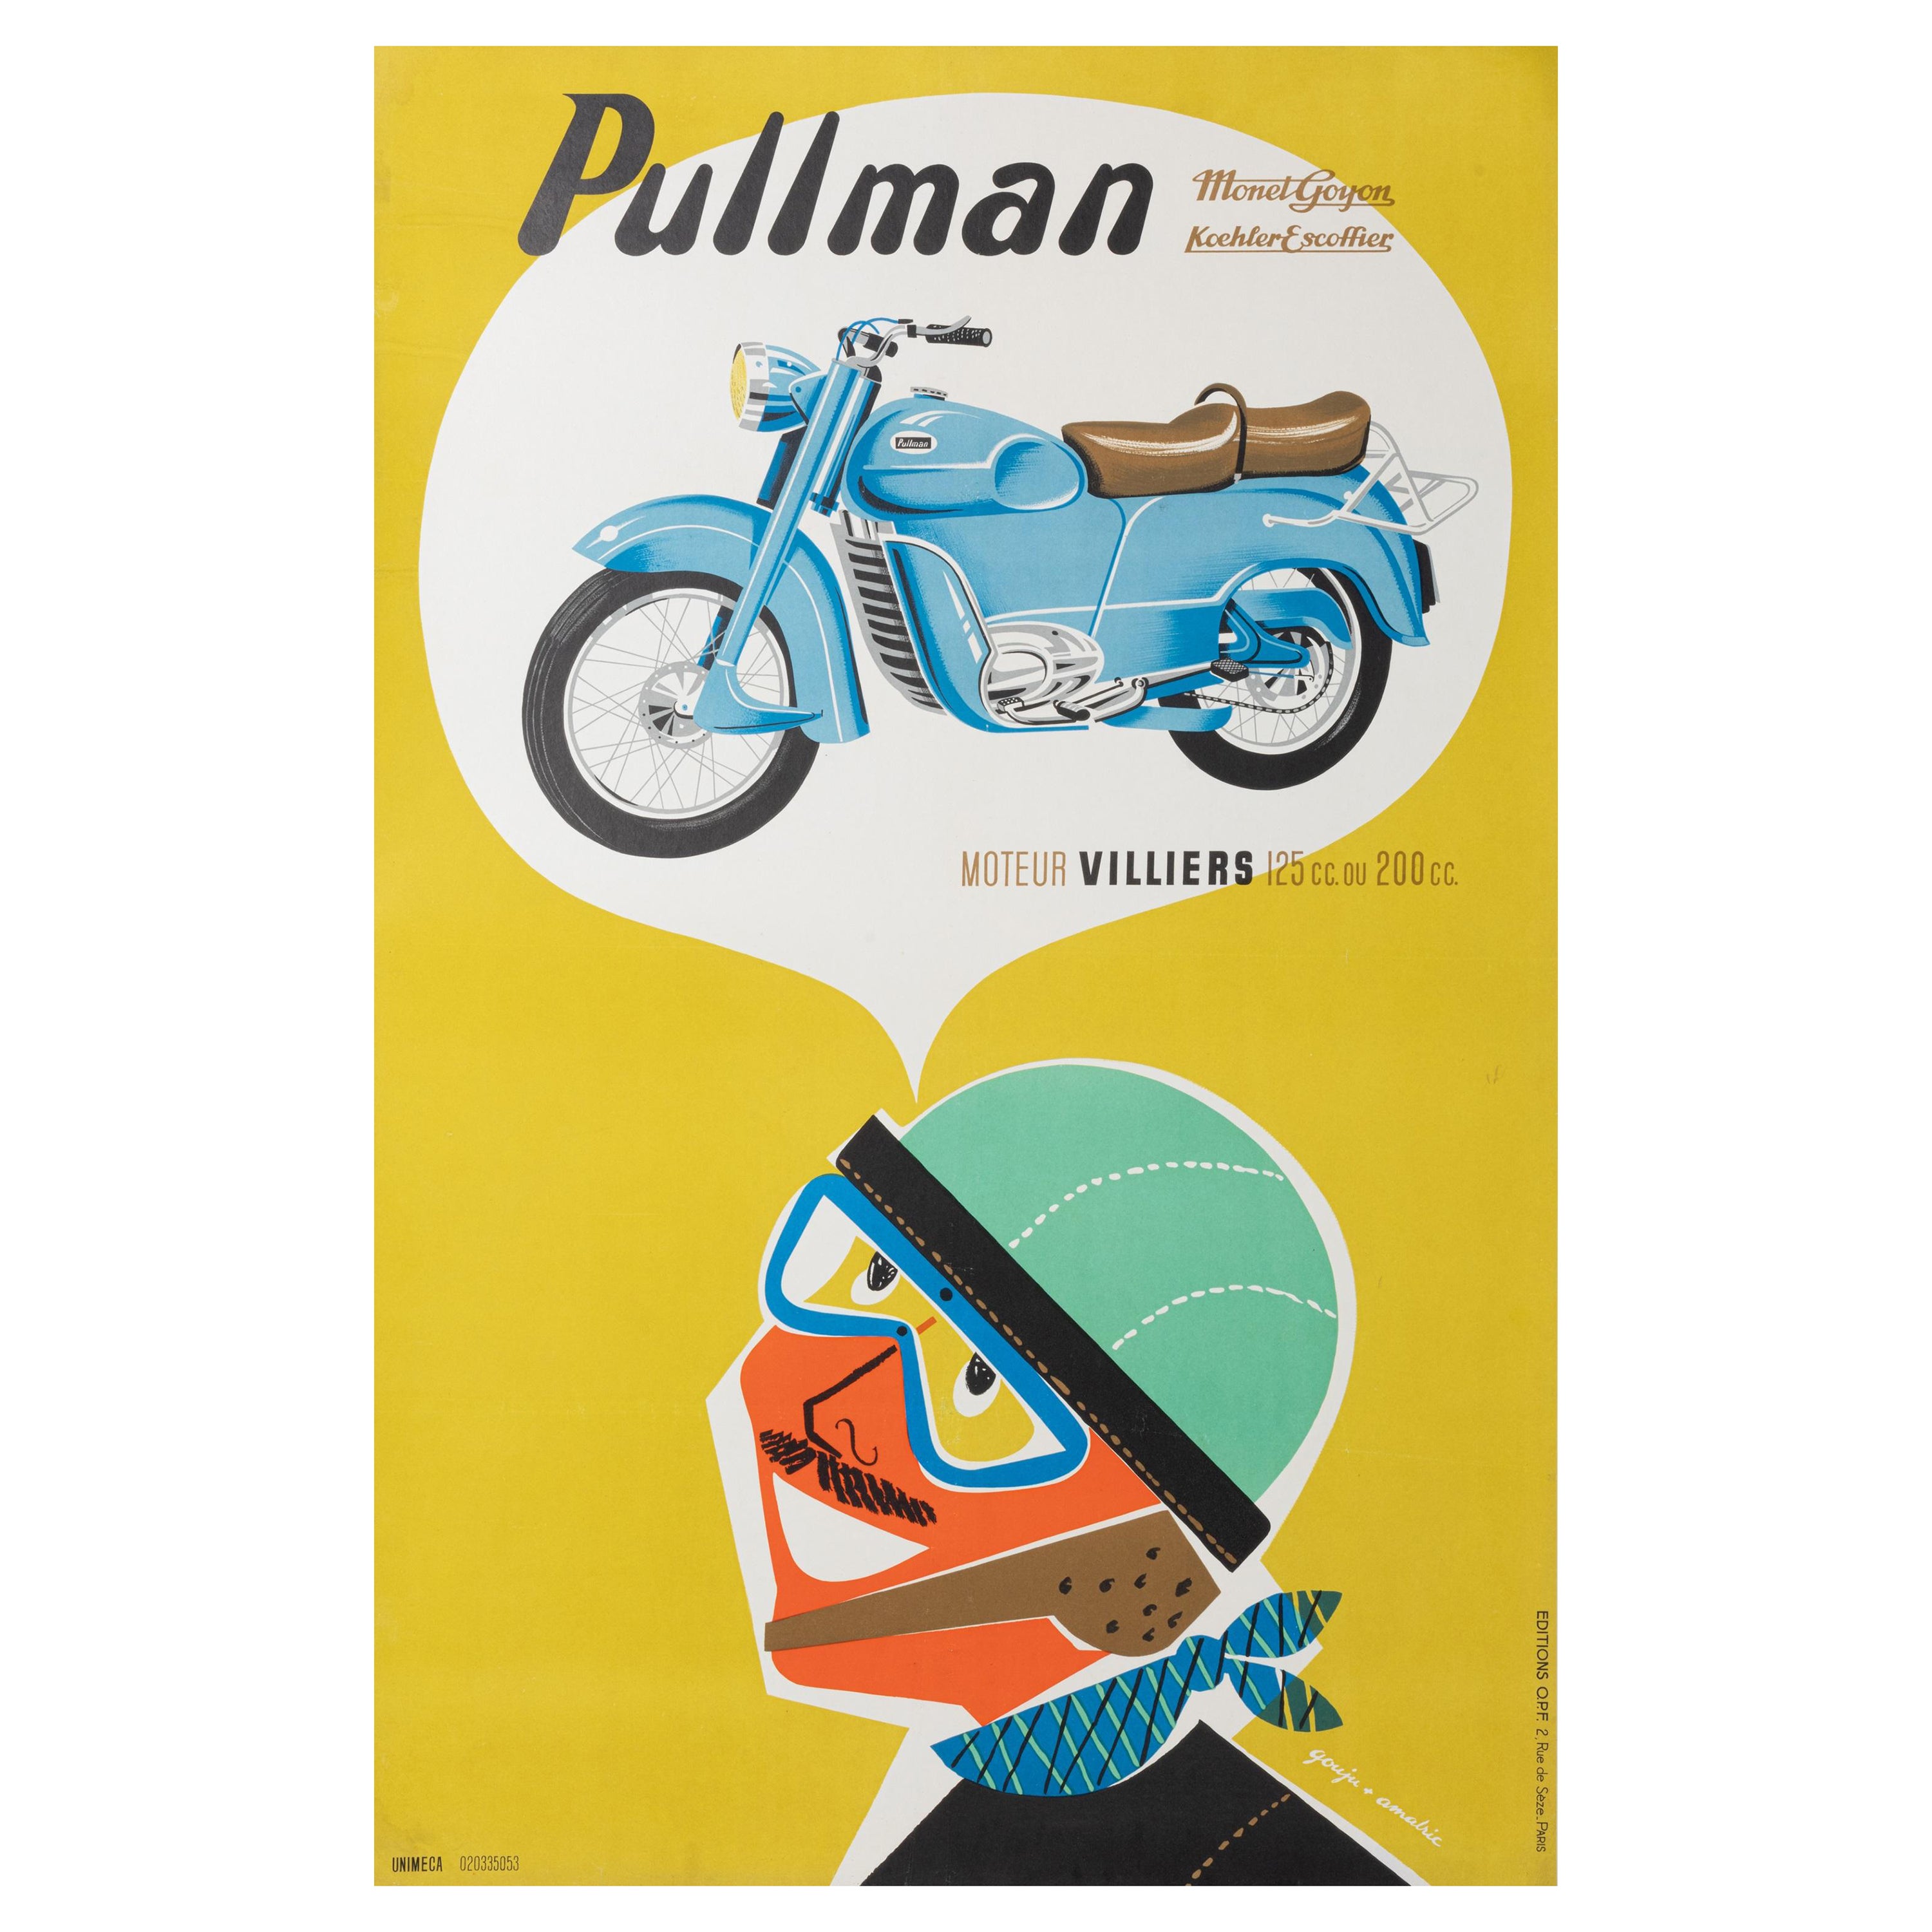 Gouju Amalric, Original Motocycle Poster, Pullman, Monet Goyon Koehler, 1956 For Sale